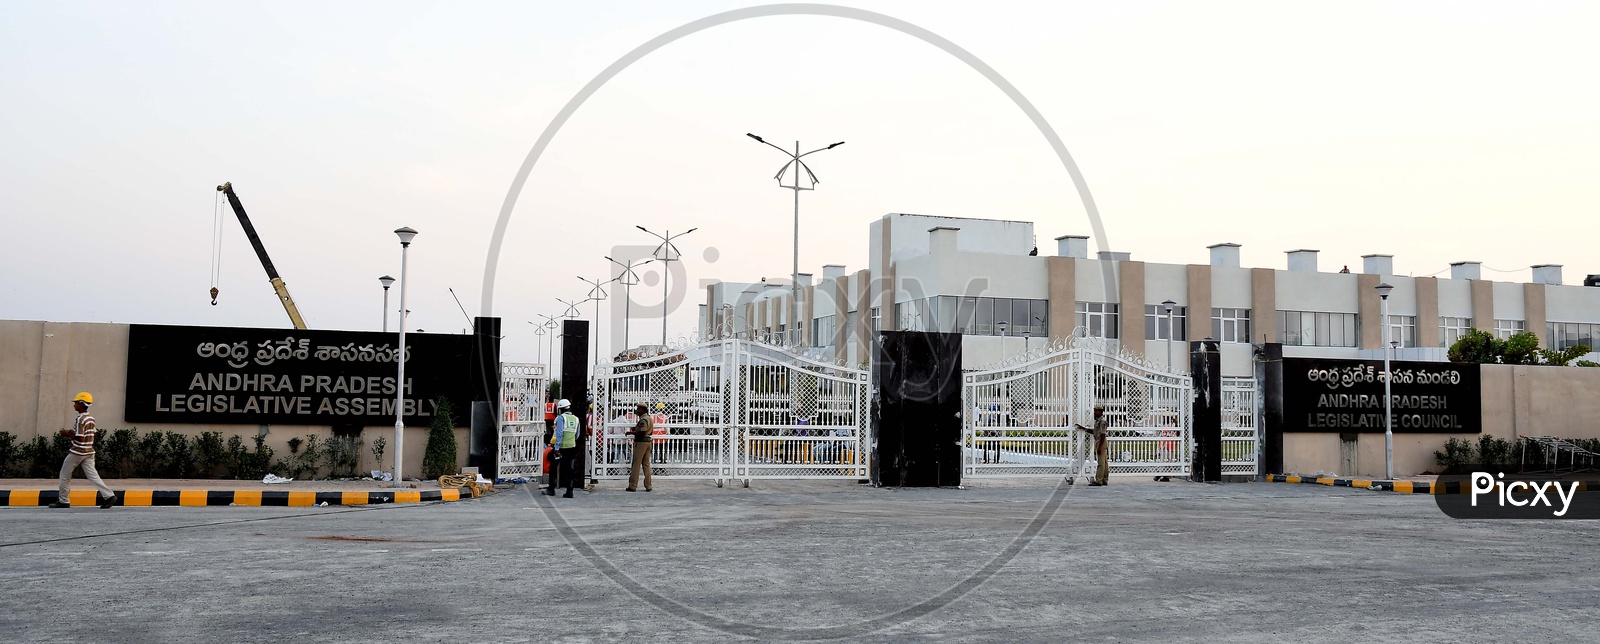 Andhra Pradesh Legislative Assembly and Council Entrance Gate